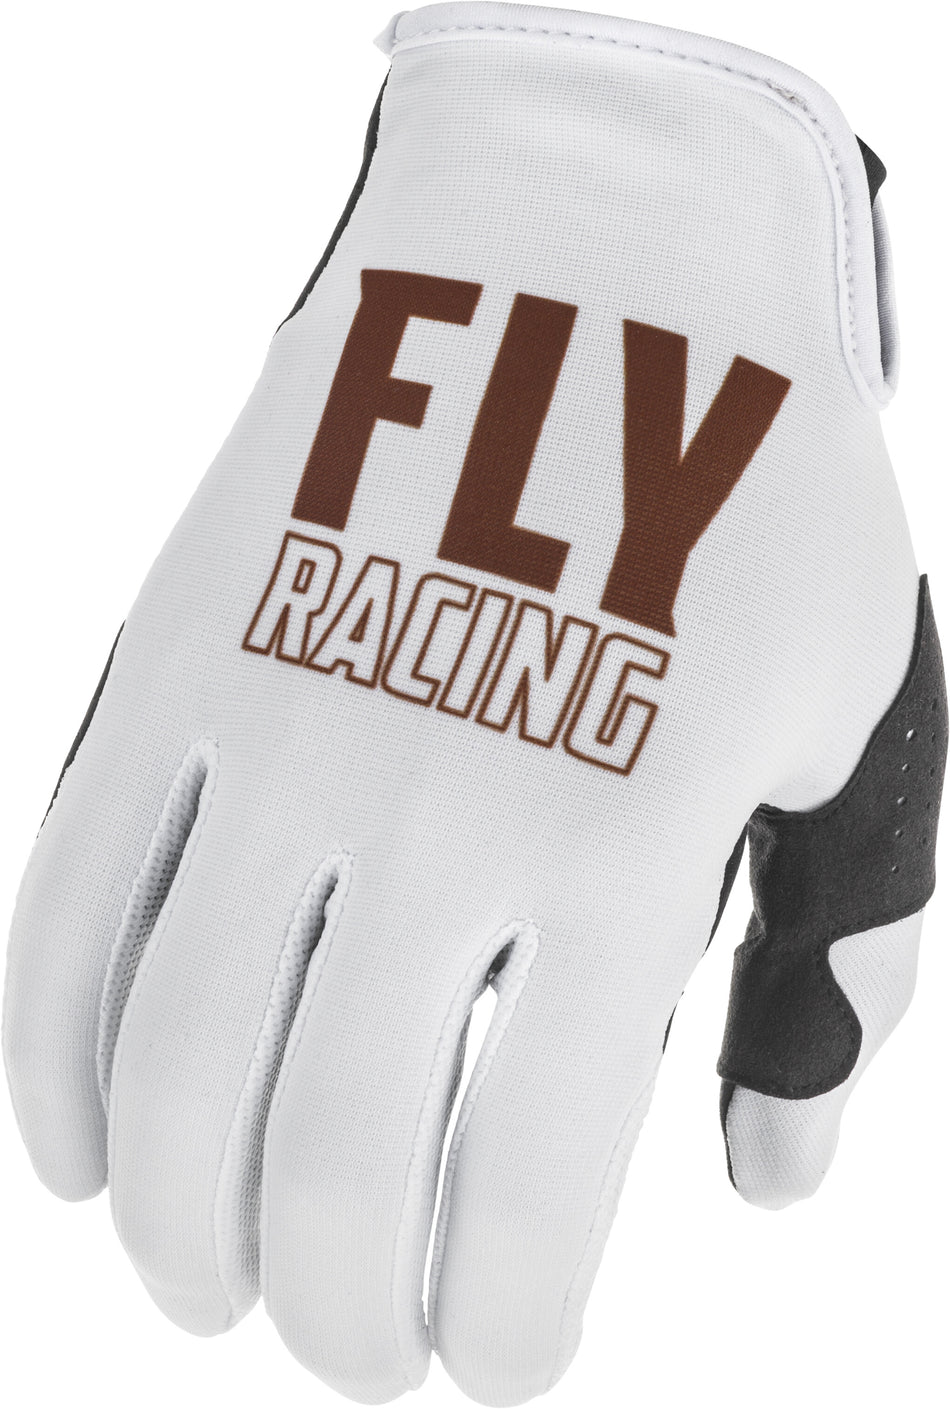 FLY RACING Lite L.E. Gloves White/Copper Sz 07 374-71907